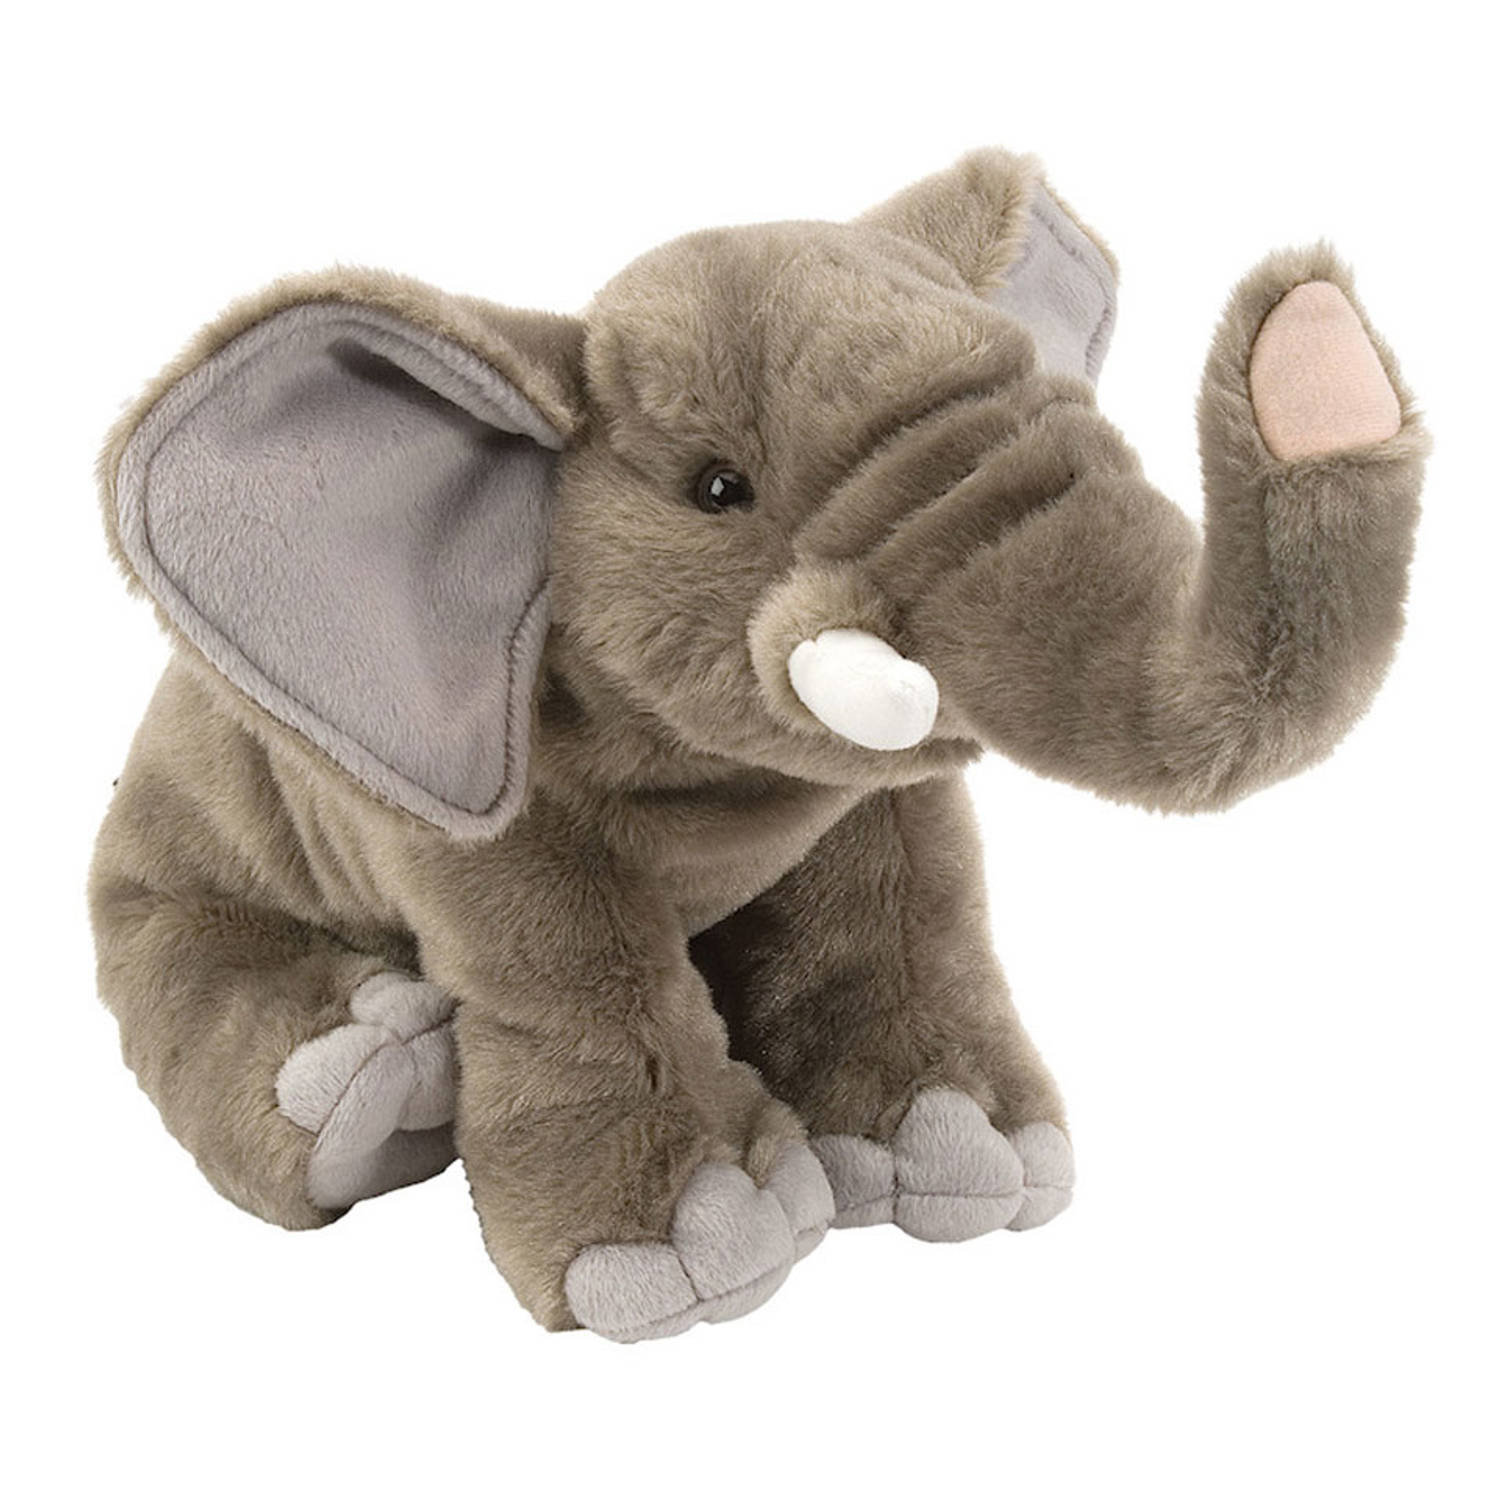 Pluche olifant knuffel 30 cm - Olifanten knuffeldieren - Speelgoed